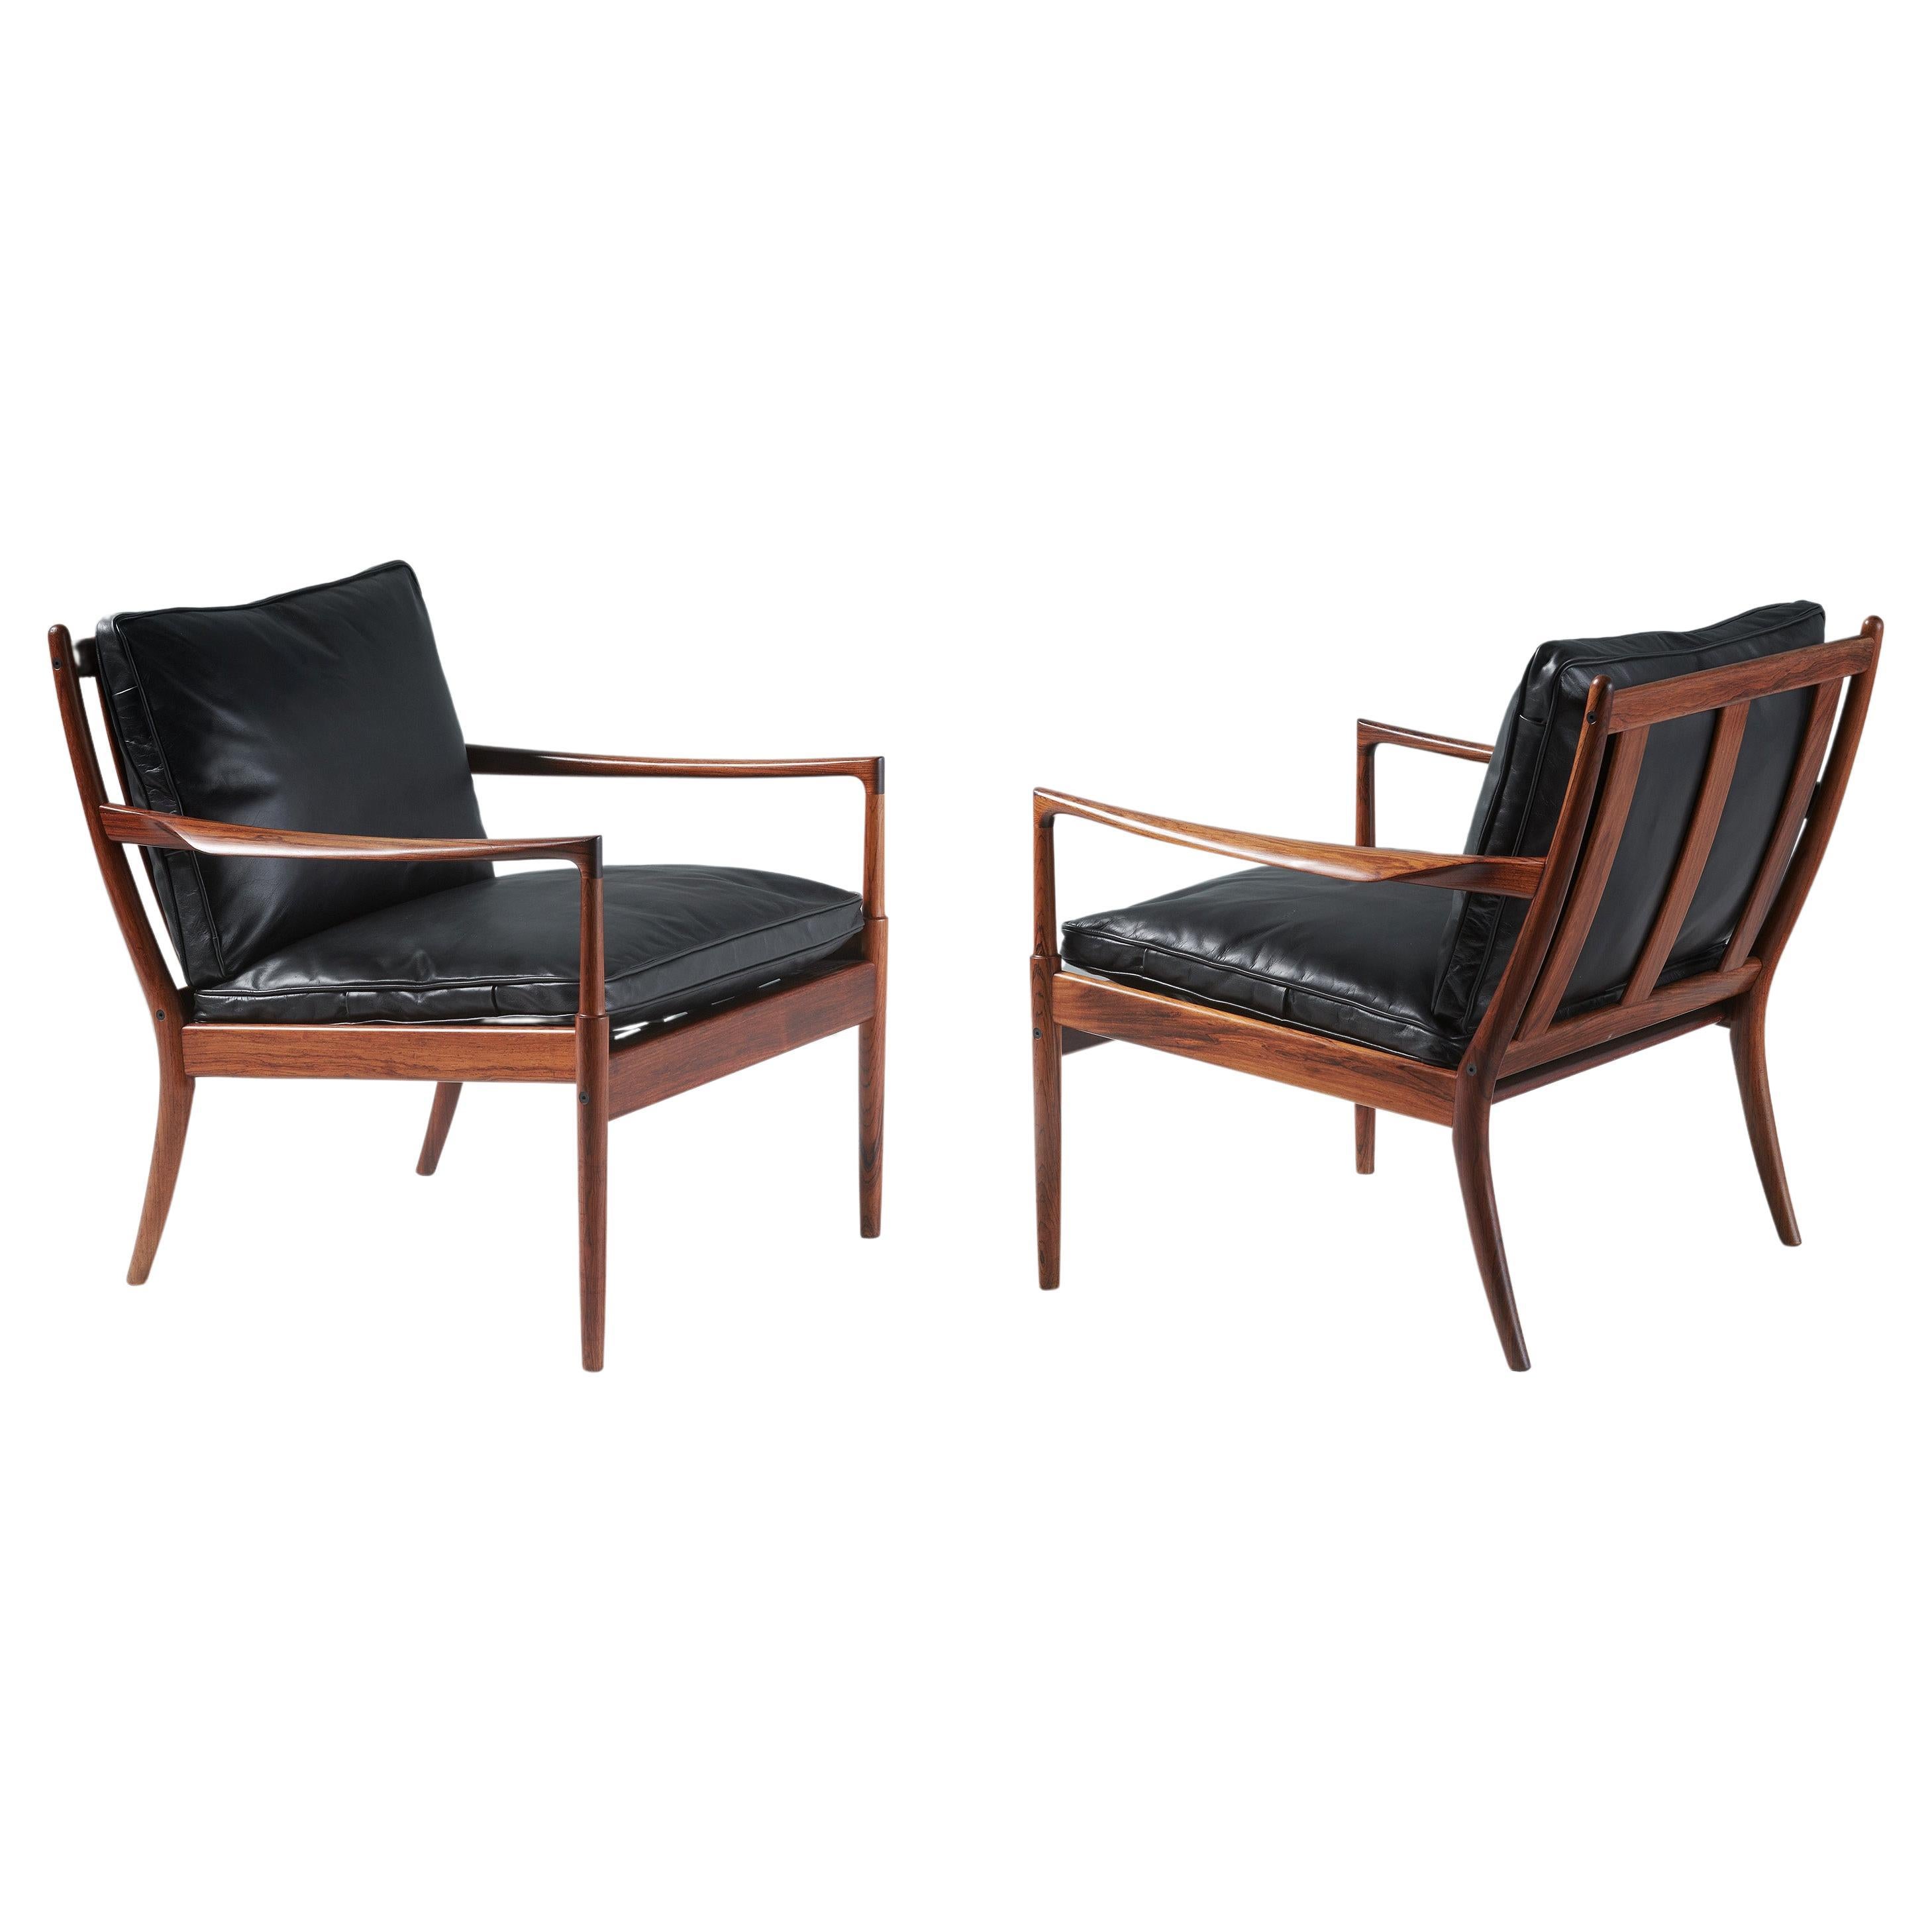 Ib Kofod-Larsen Rosewood Samso Chairs, c1950s For Sale